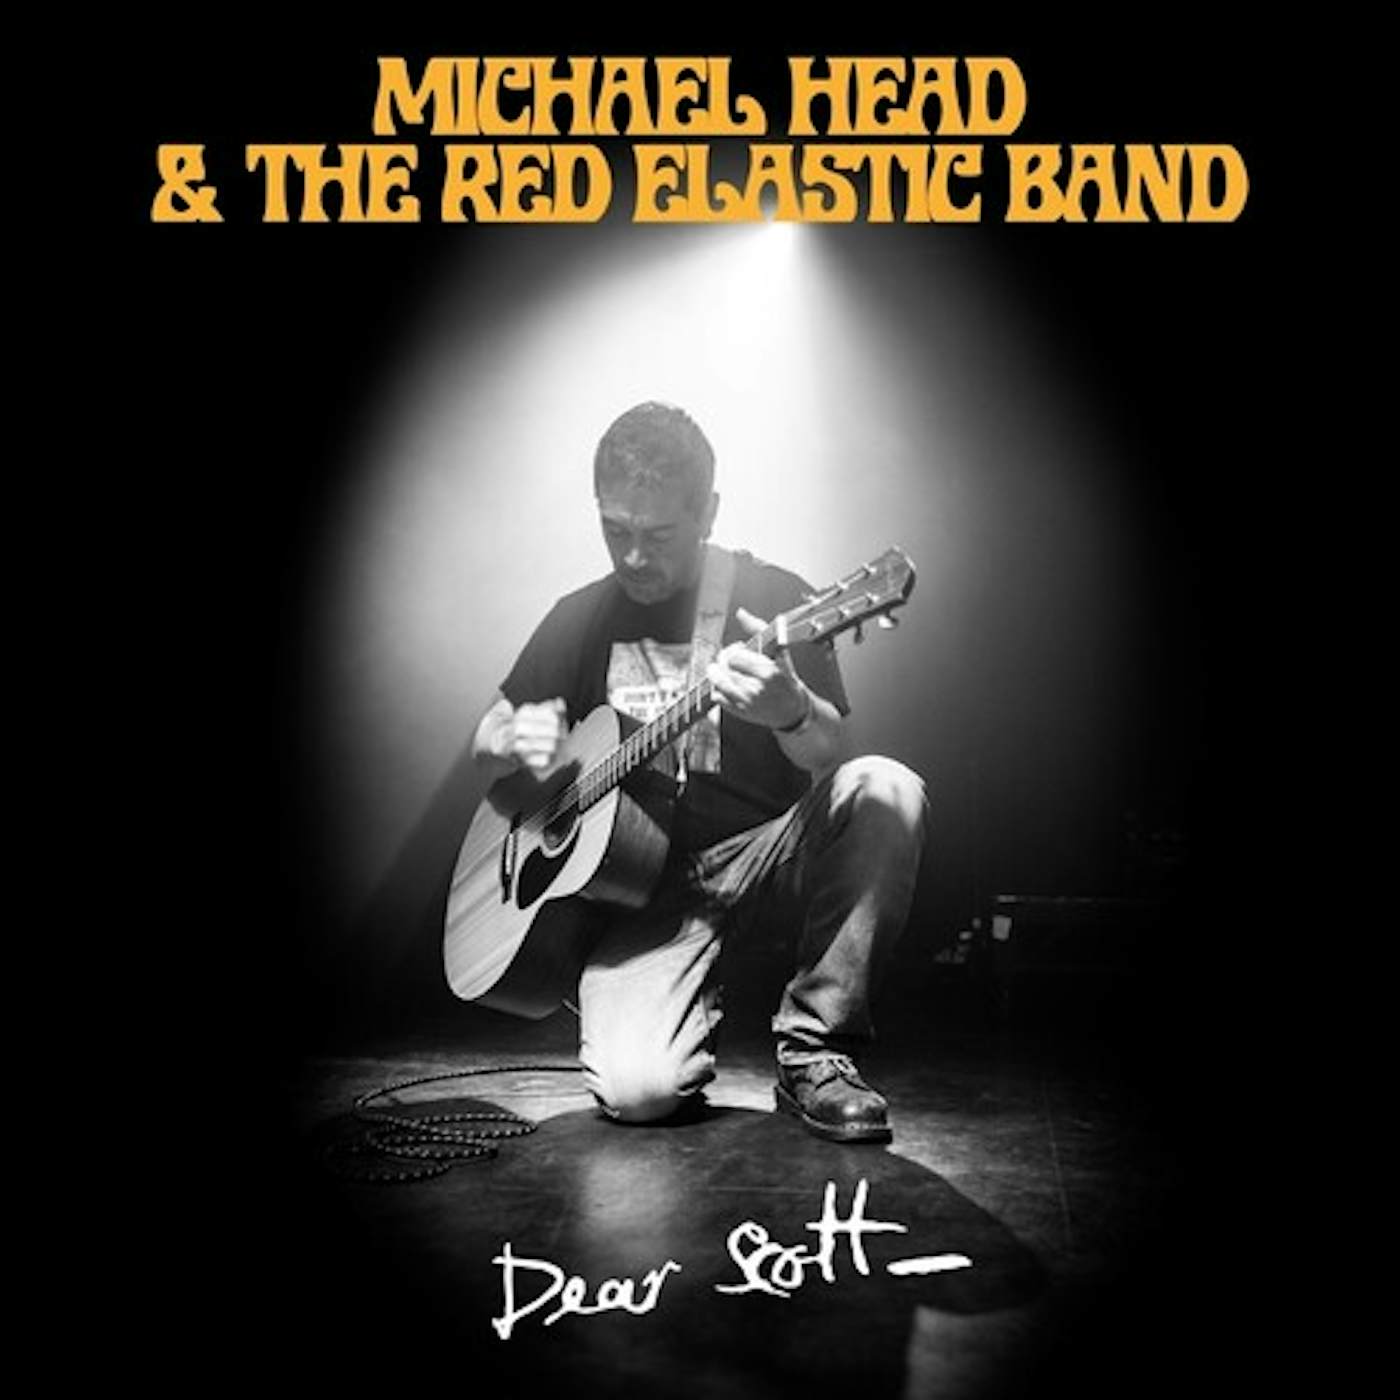 Michael Head & The Red Elastic Band DEAR SCOTT CD